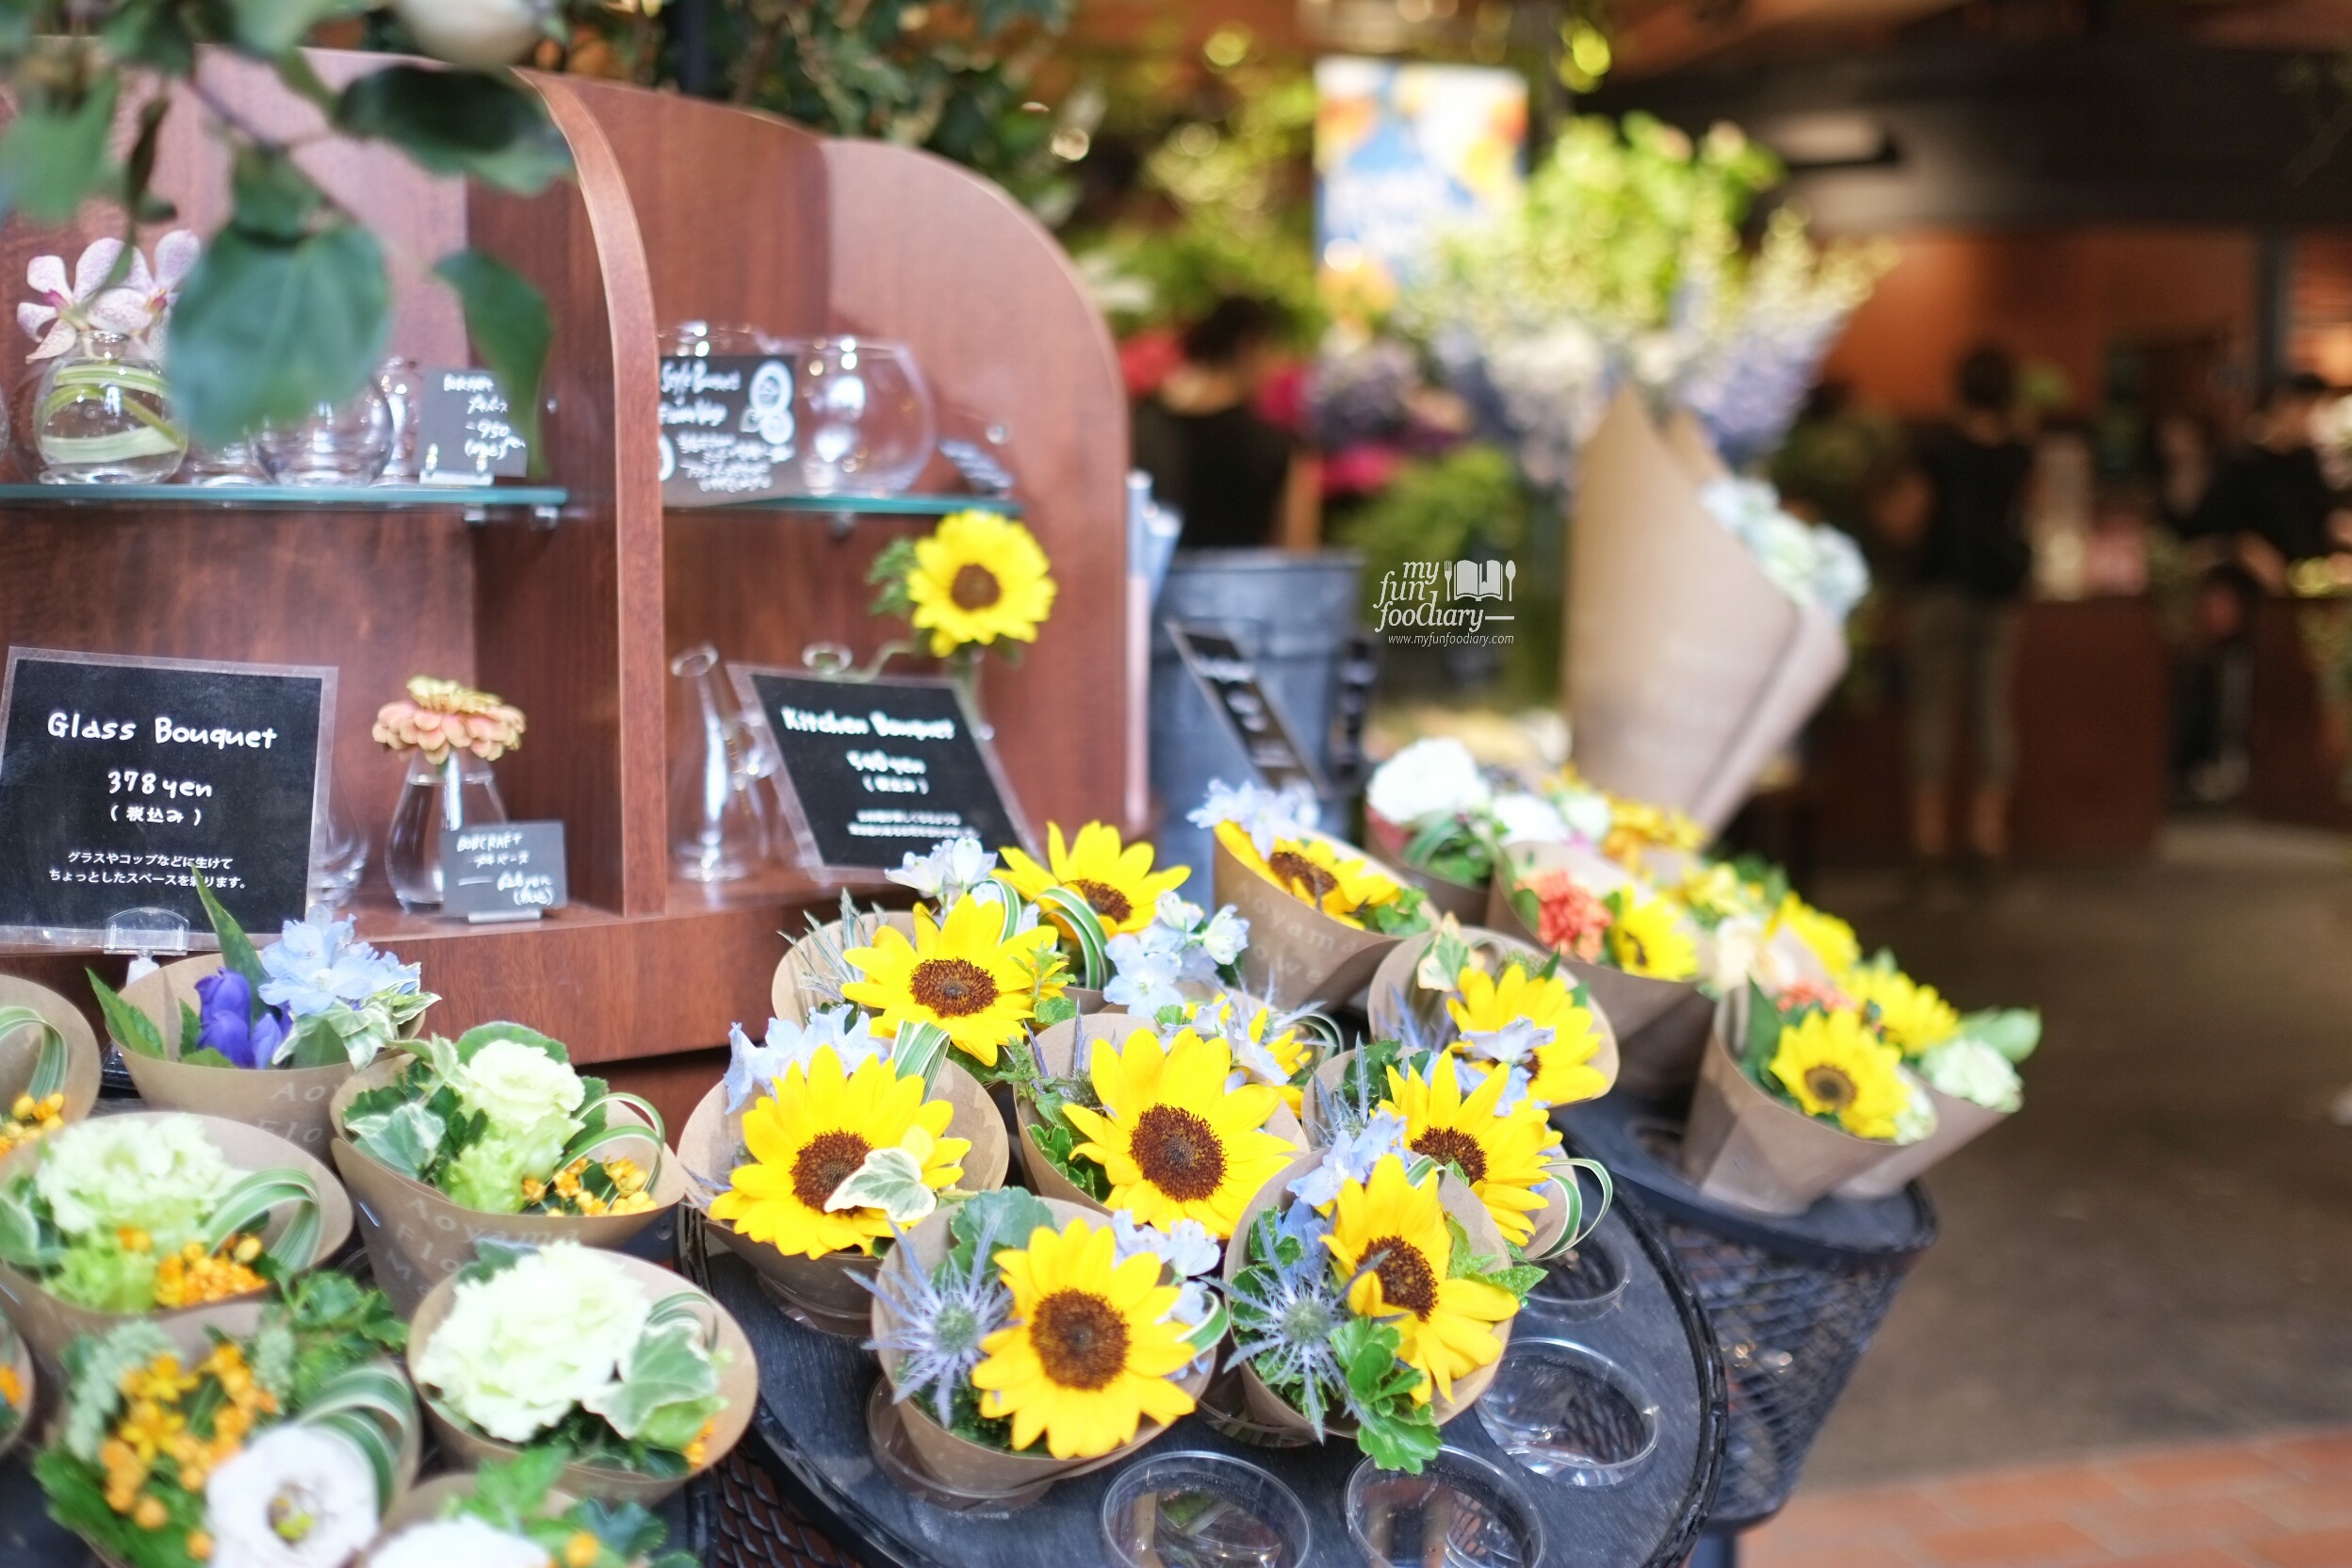 Beautiful Flowers at Aoyama Flower Market in Tokyo Japan by Myfunfoodiary 05